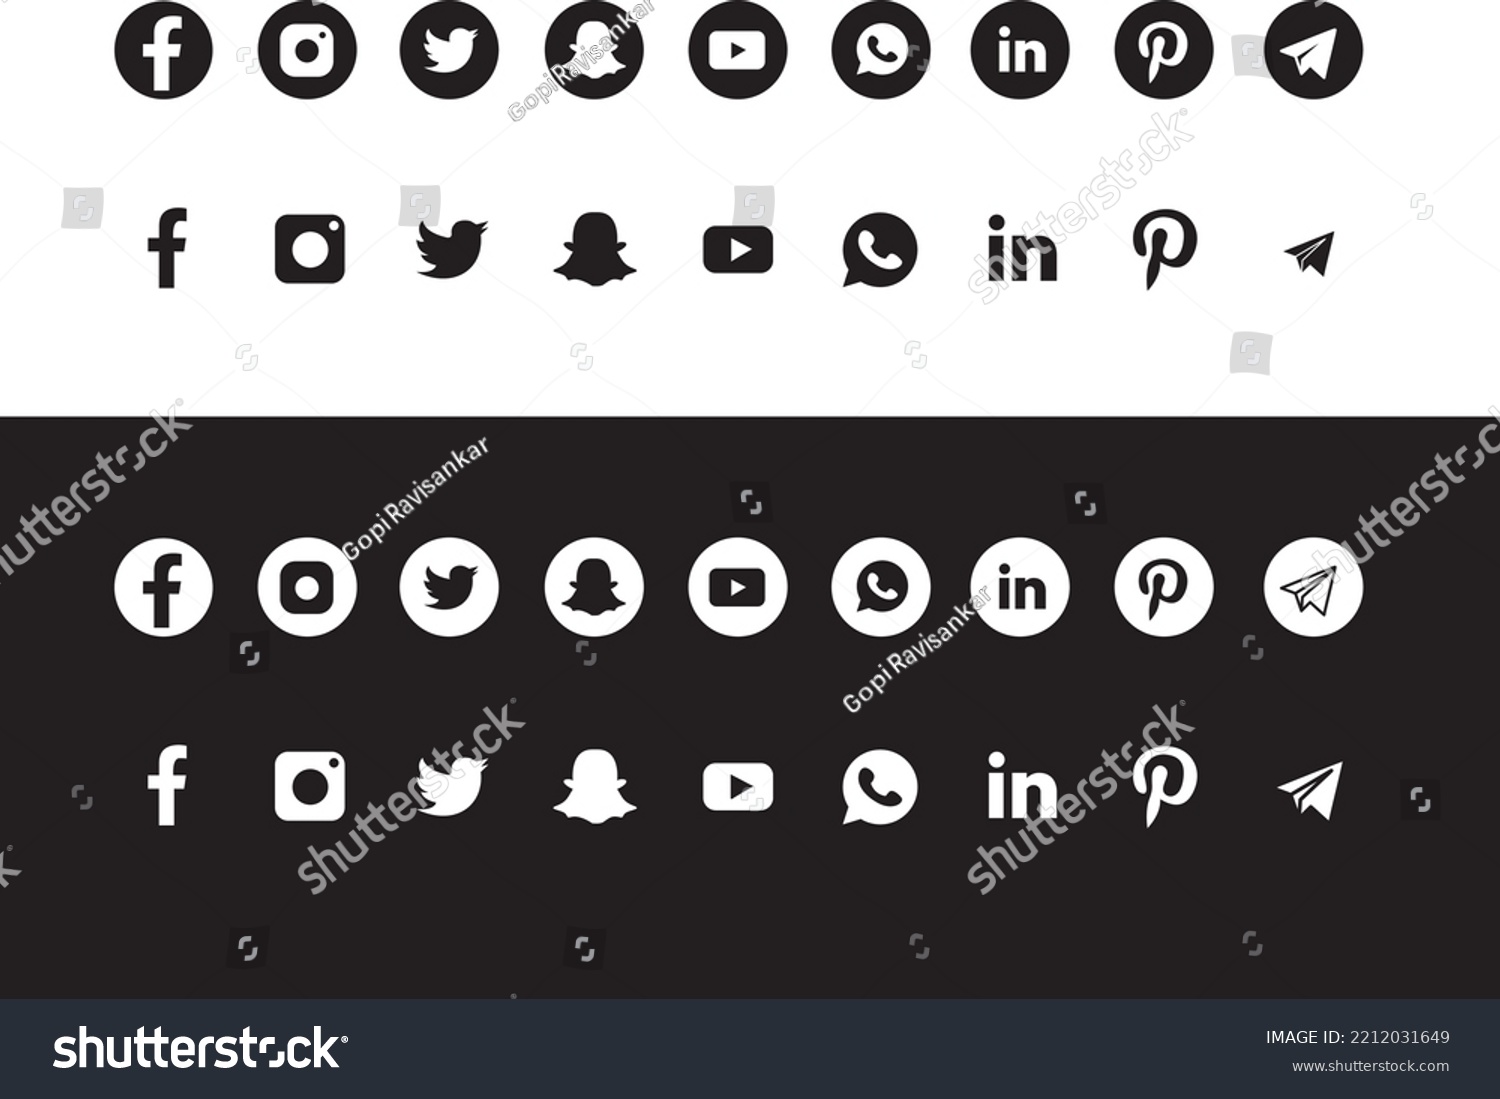 Collection of popular social media logo, popular social media fill icons printed on paper : Facebook, Instagram, Snapchat, LinkedIn, Twitter, Youtube, Pinterest, WhatsApp #2212031649